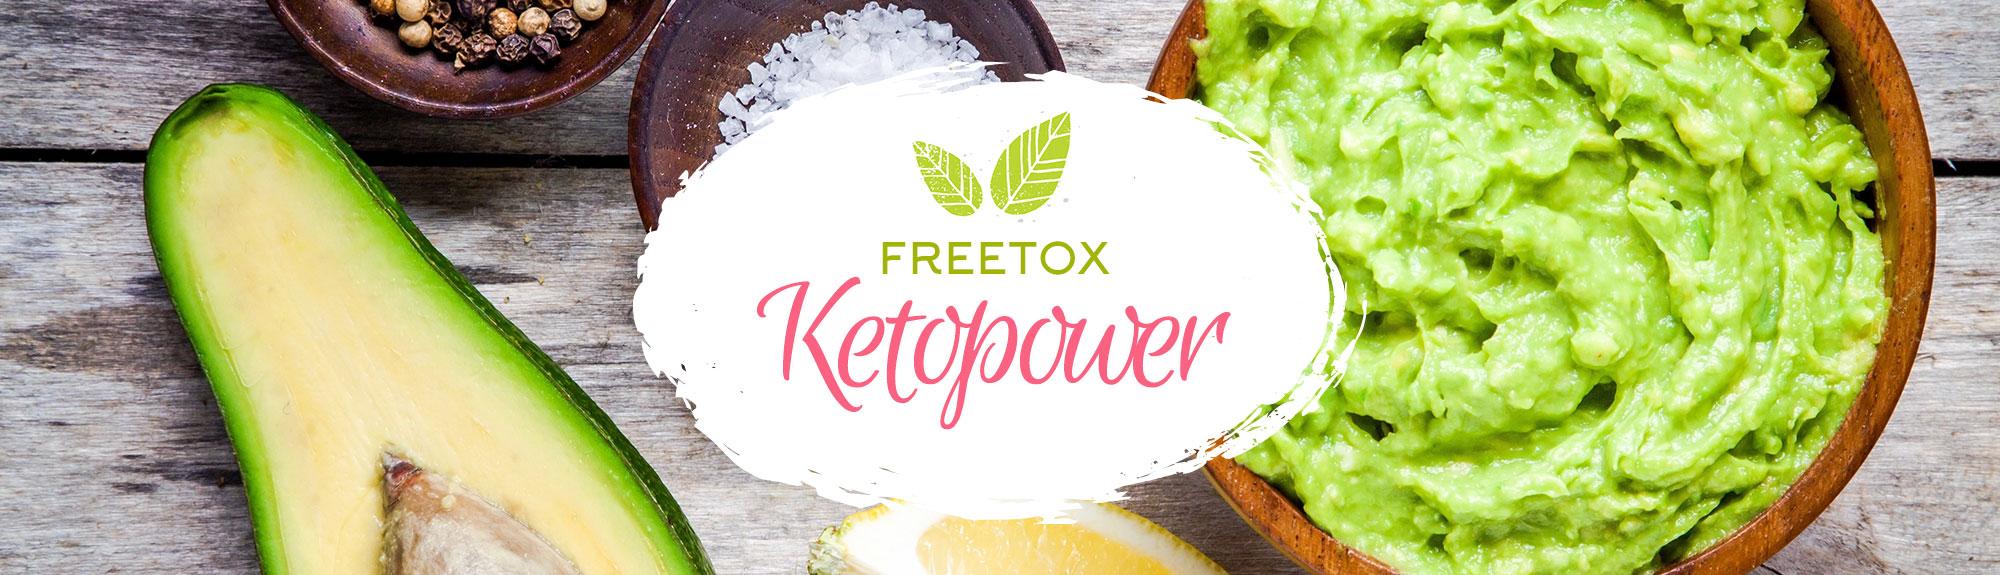 Freetox Ketopower